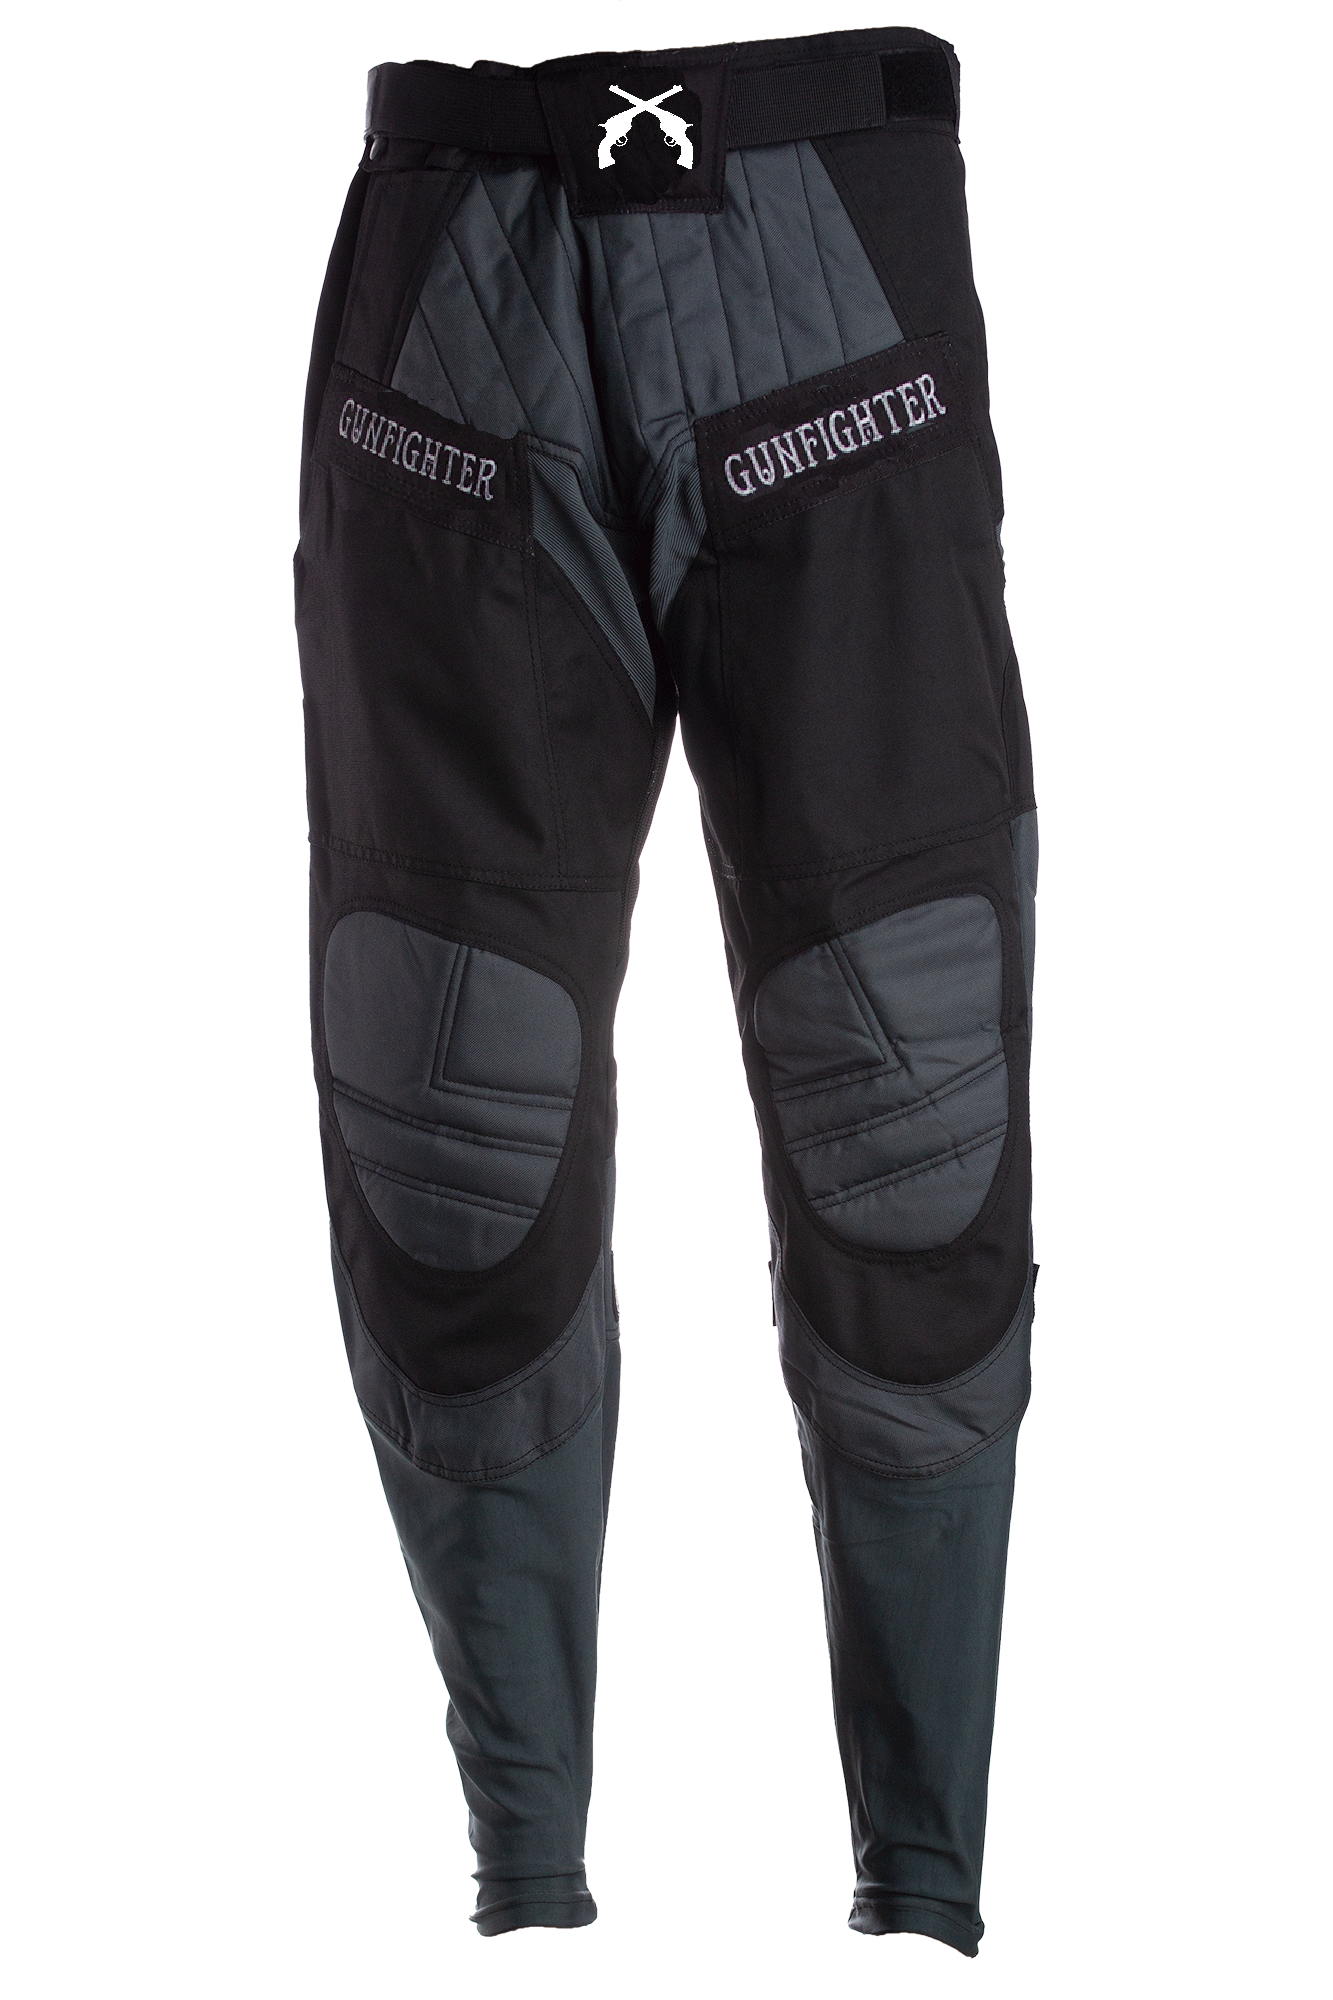 Gunfighter Sports Stirrup Pants - Black/Grey